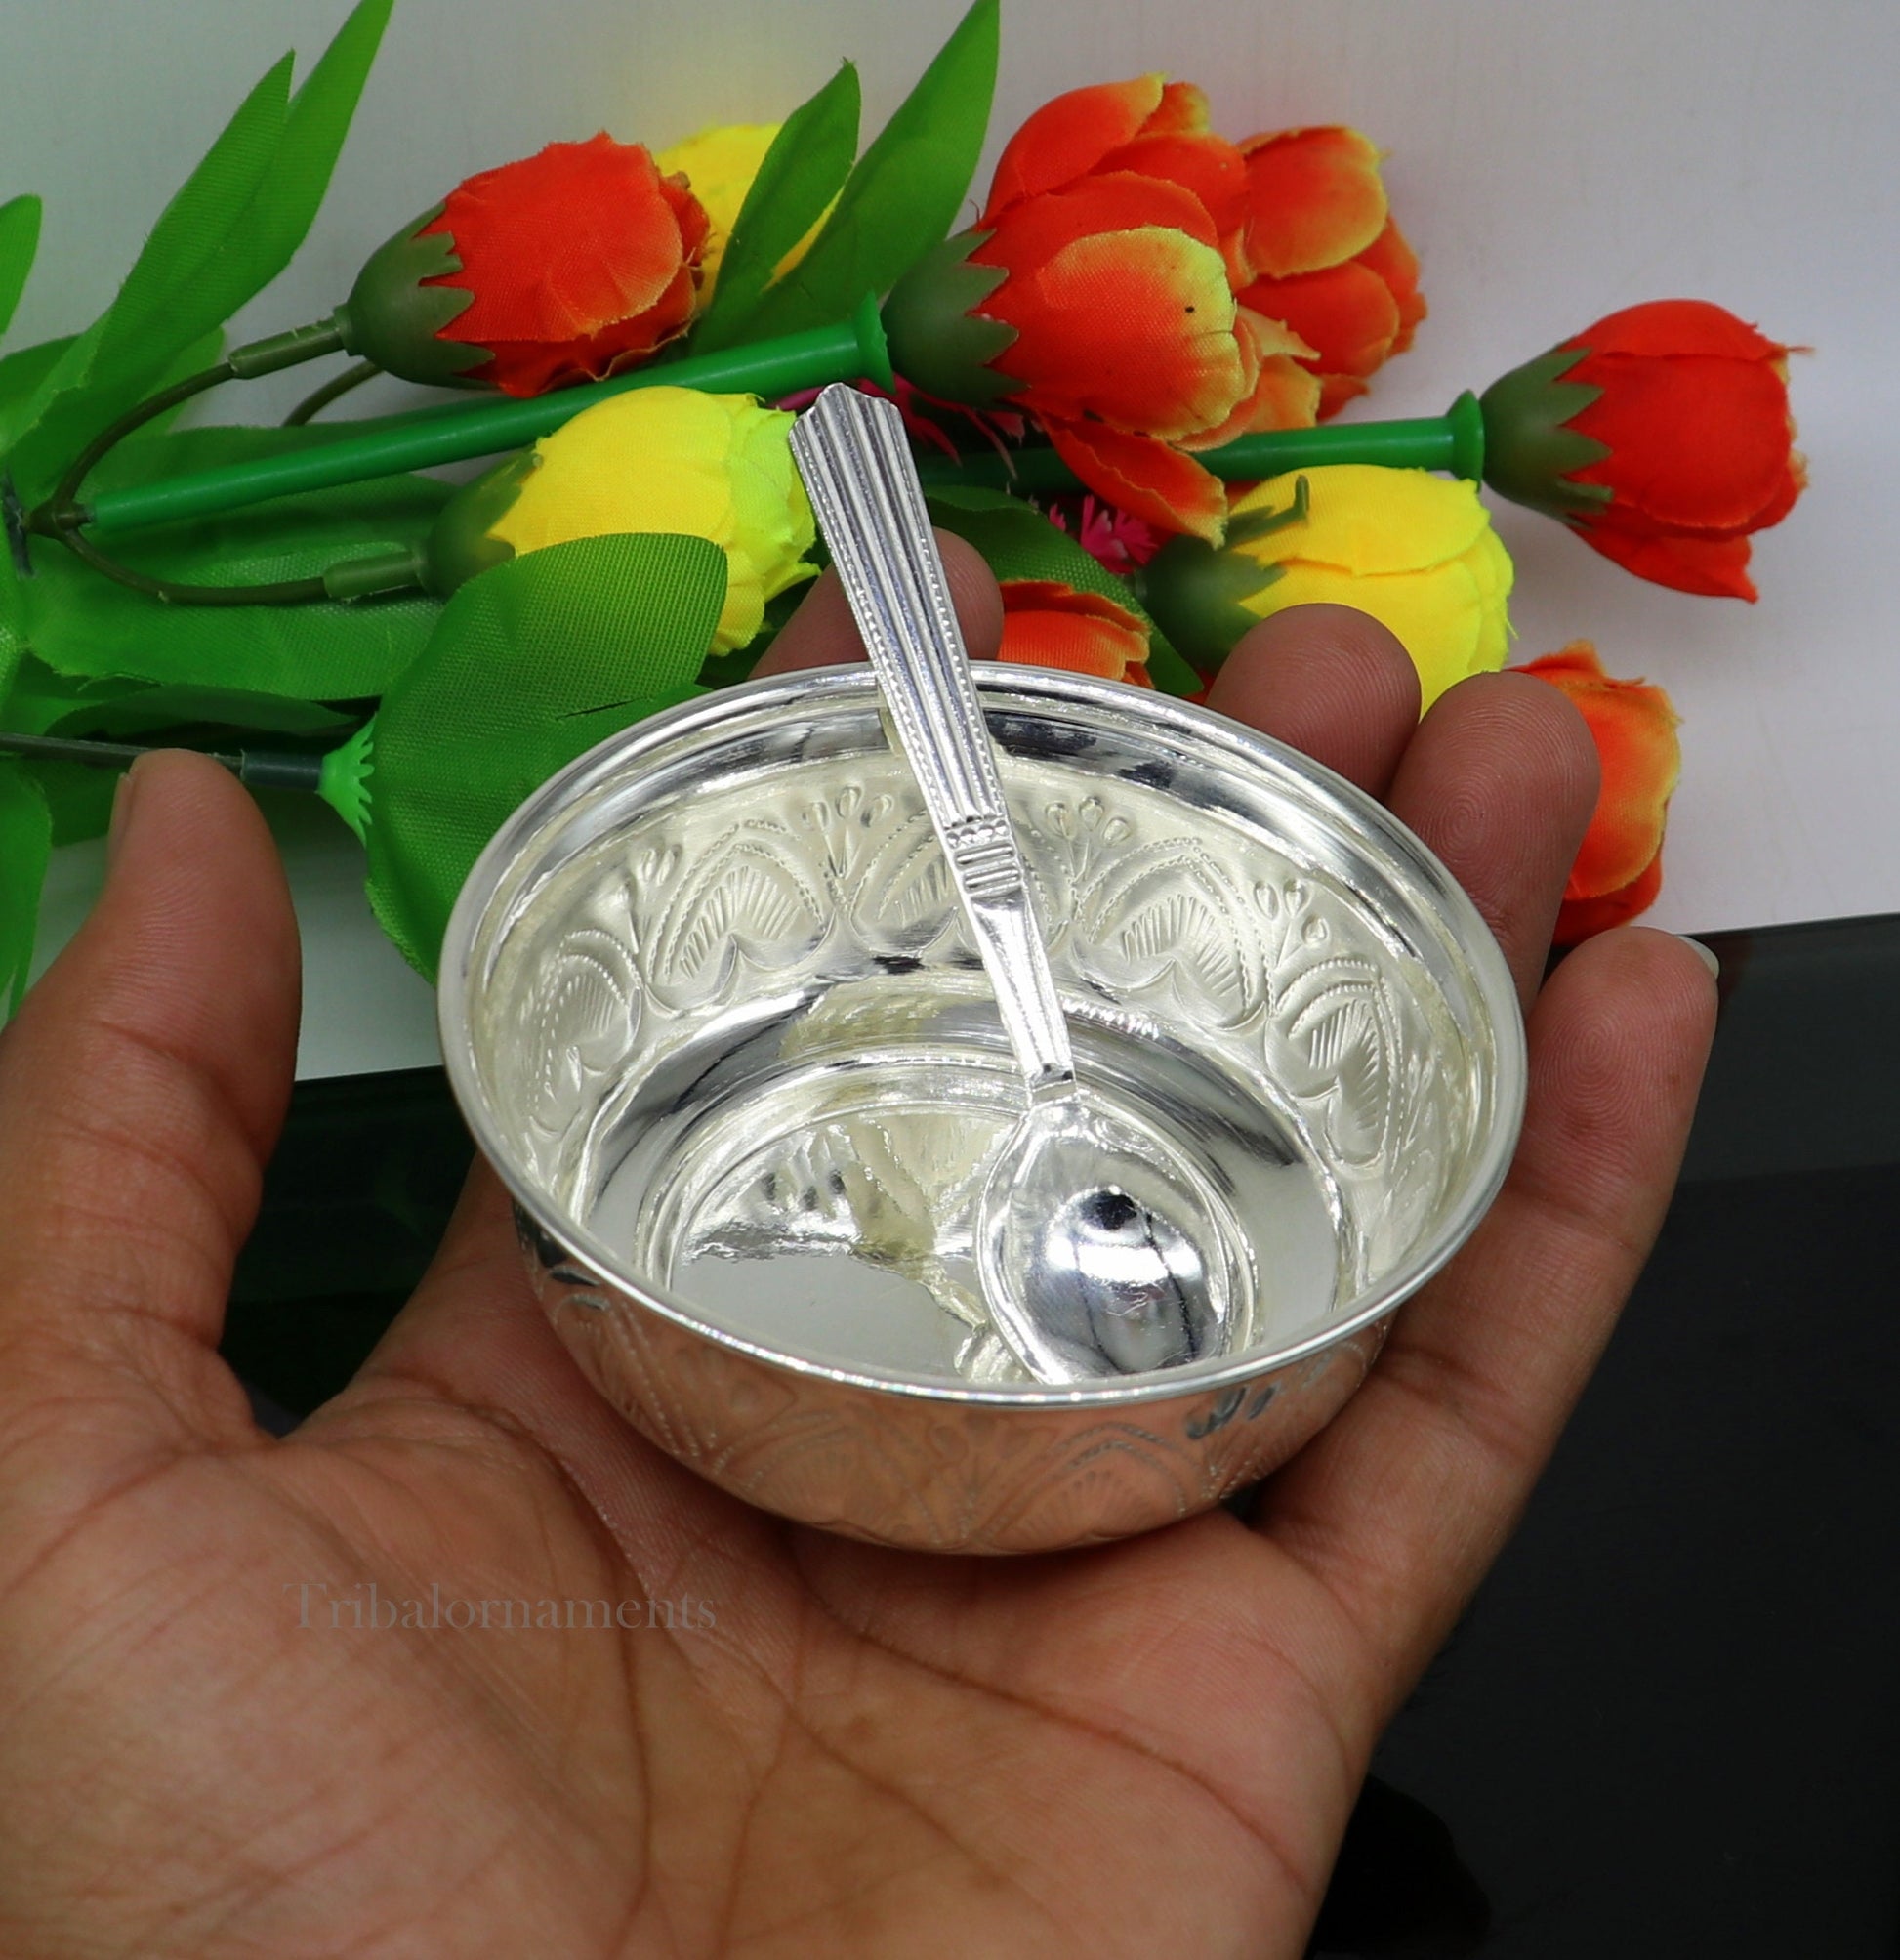 Solid 999 silver handmade vintage kandrai nakshi work bowl, silver puja vessel, silver worshipping/puja utensils prasad bowl baby bowl sv246 - TRIBAL ORNAMENTS